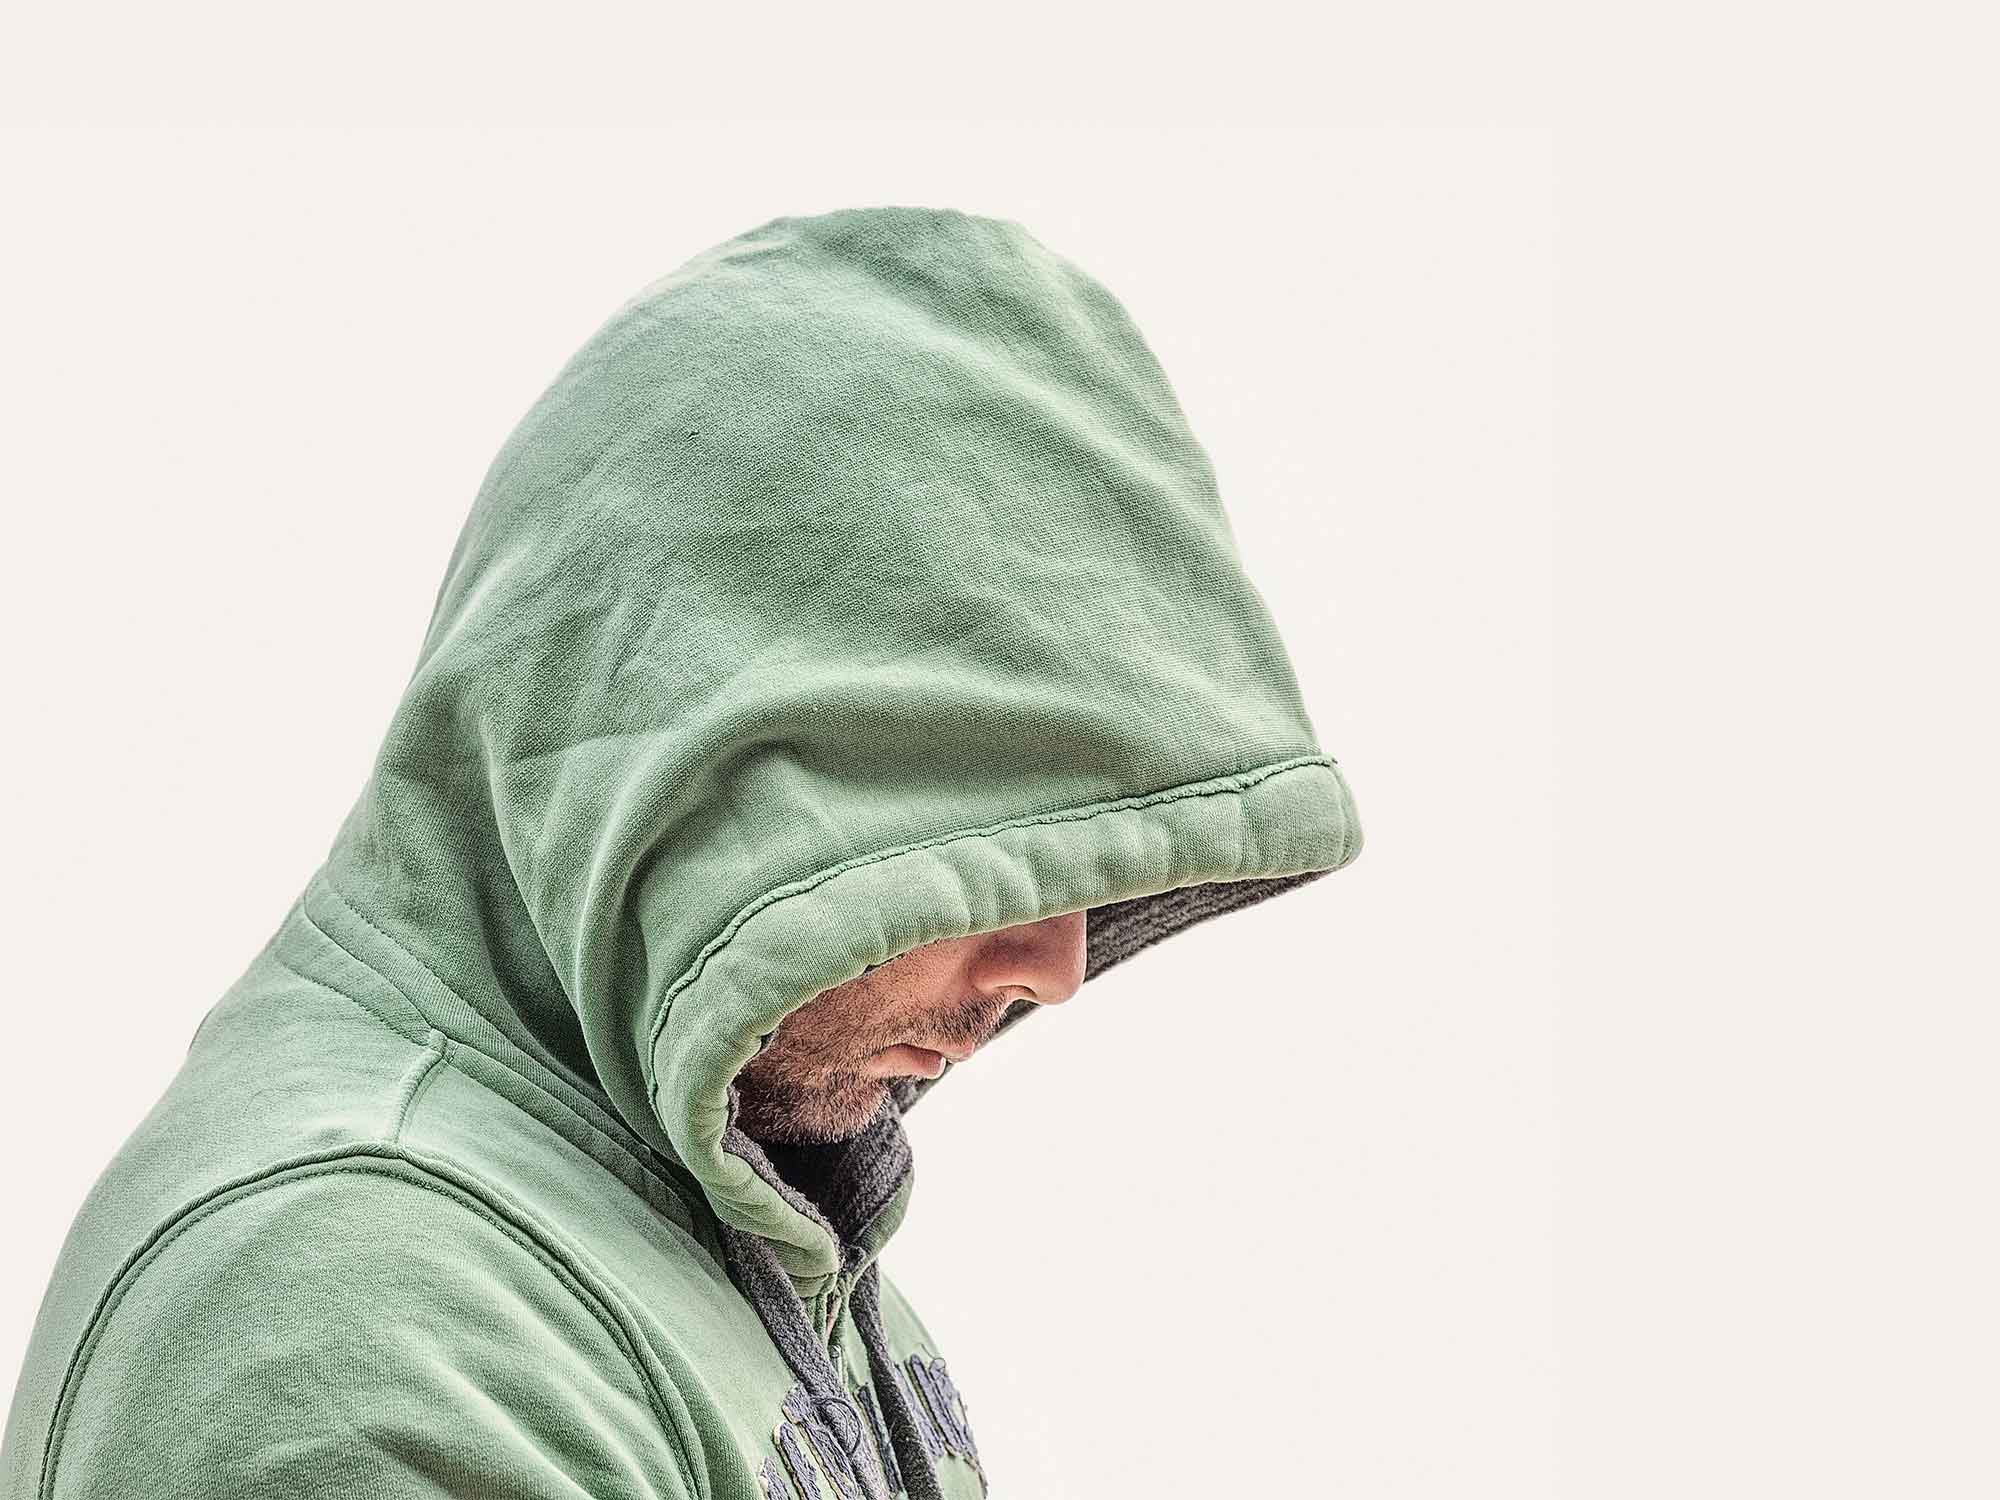 Three Tips For Choosing a Quality Hooded Sweatshirt